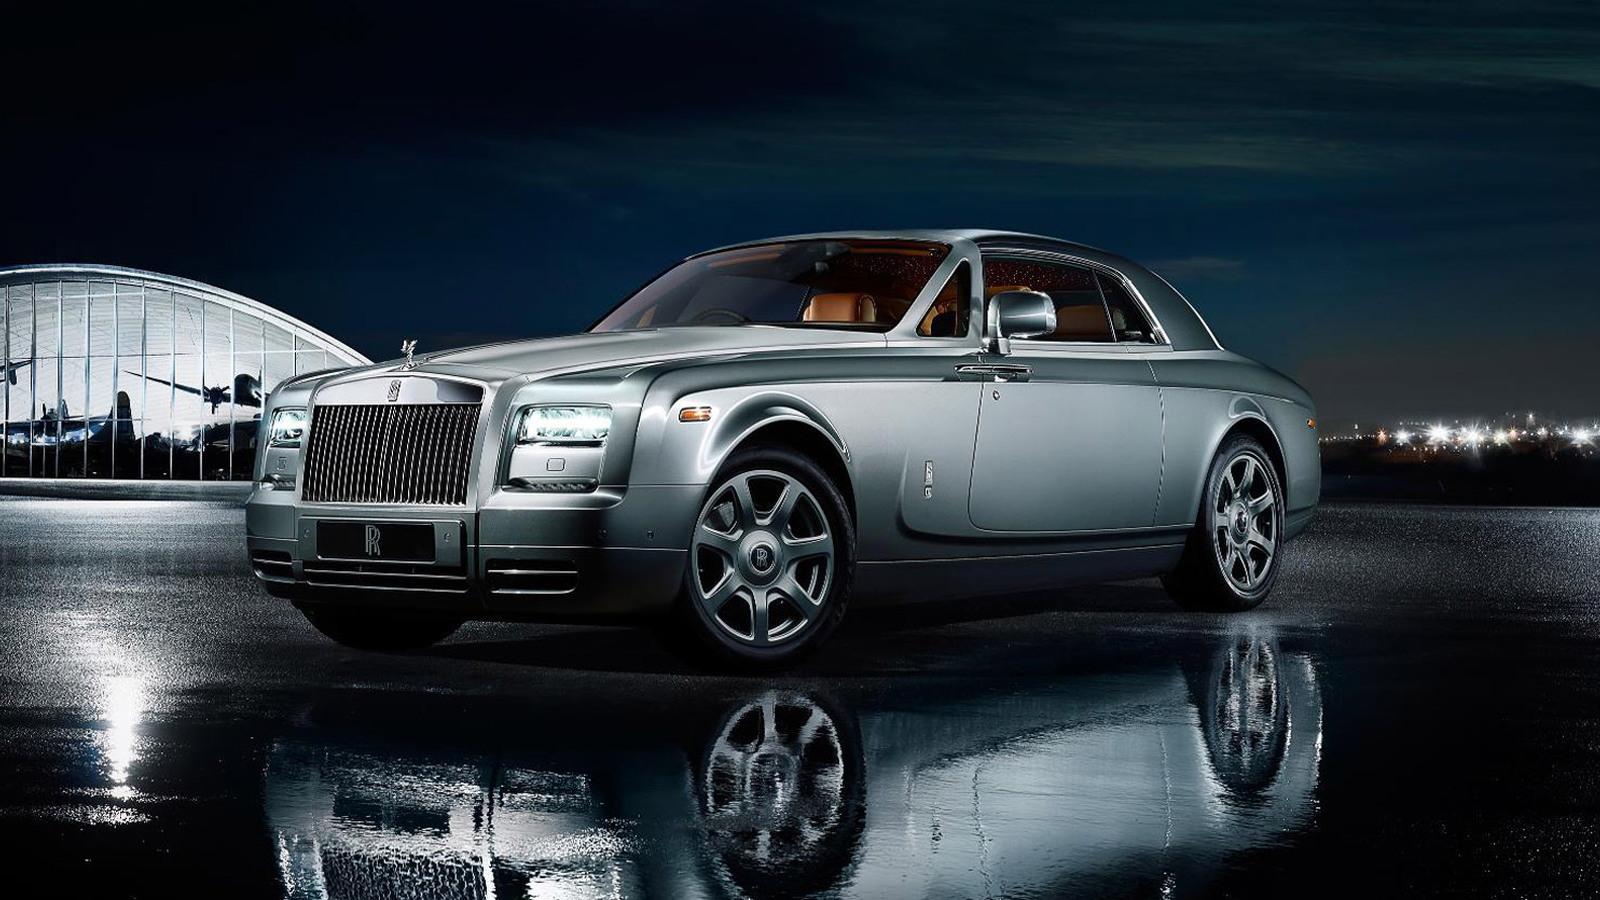 Used 2013 RollsRoyce Phantom EXTENDED WHEELBASE EWB For Sale Sold   Bentley Gold Coast Chicago Stock B515A